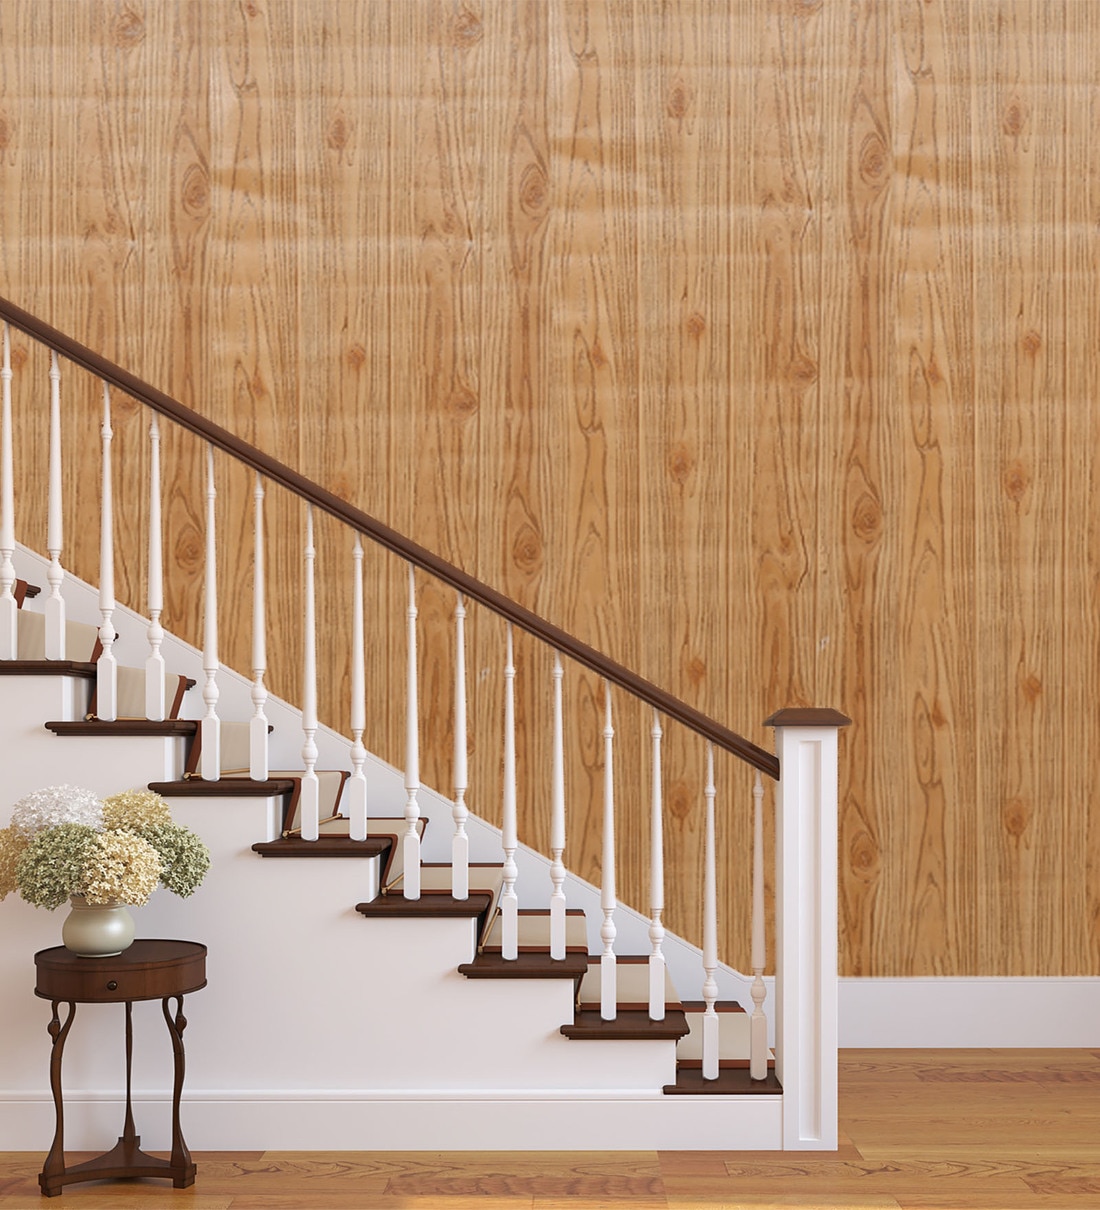 Buy d wood grains pattern brown pvc wallpaper with emboss finish by konark decor online